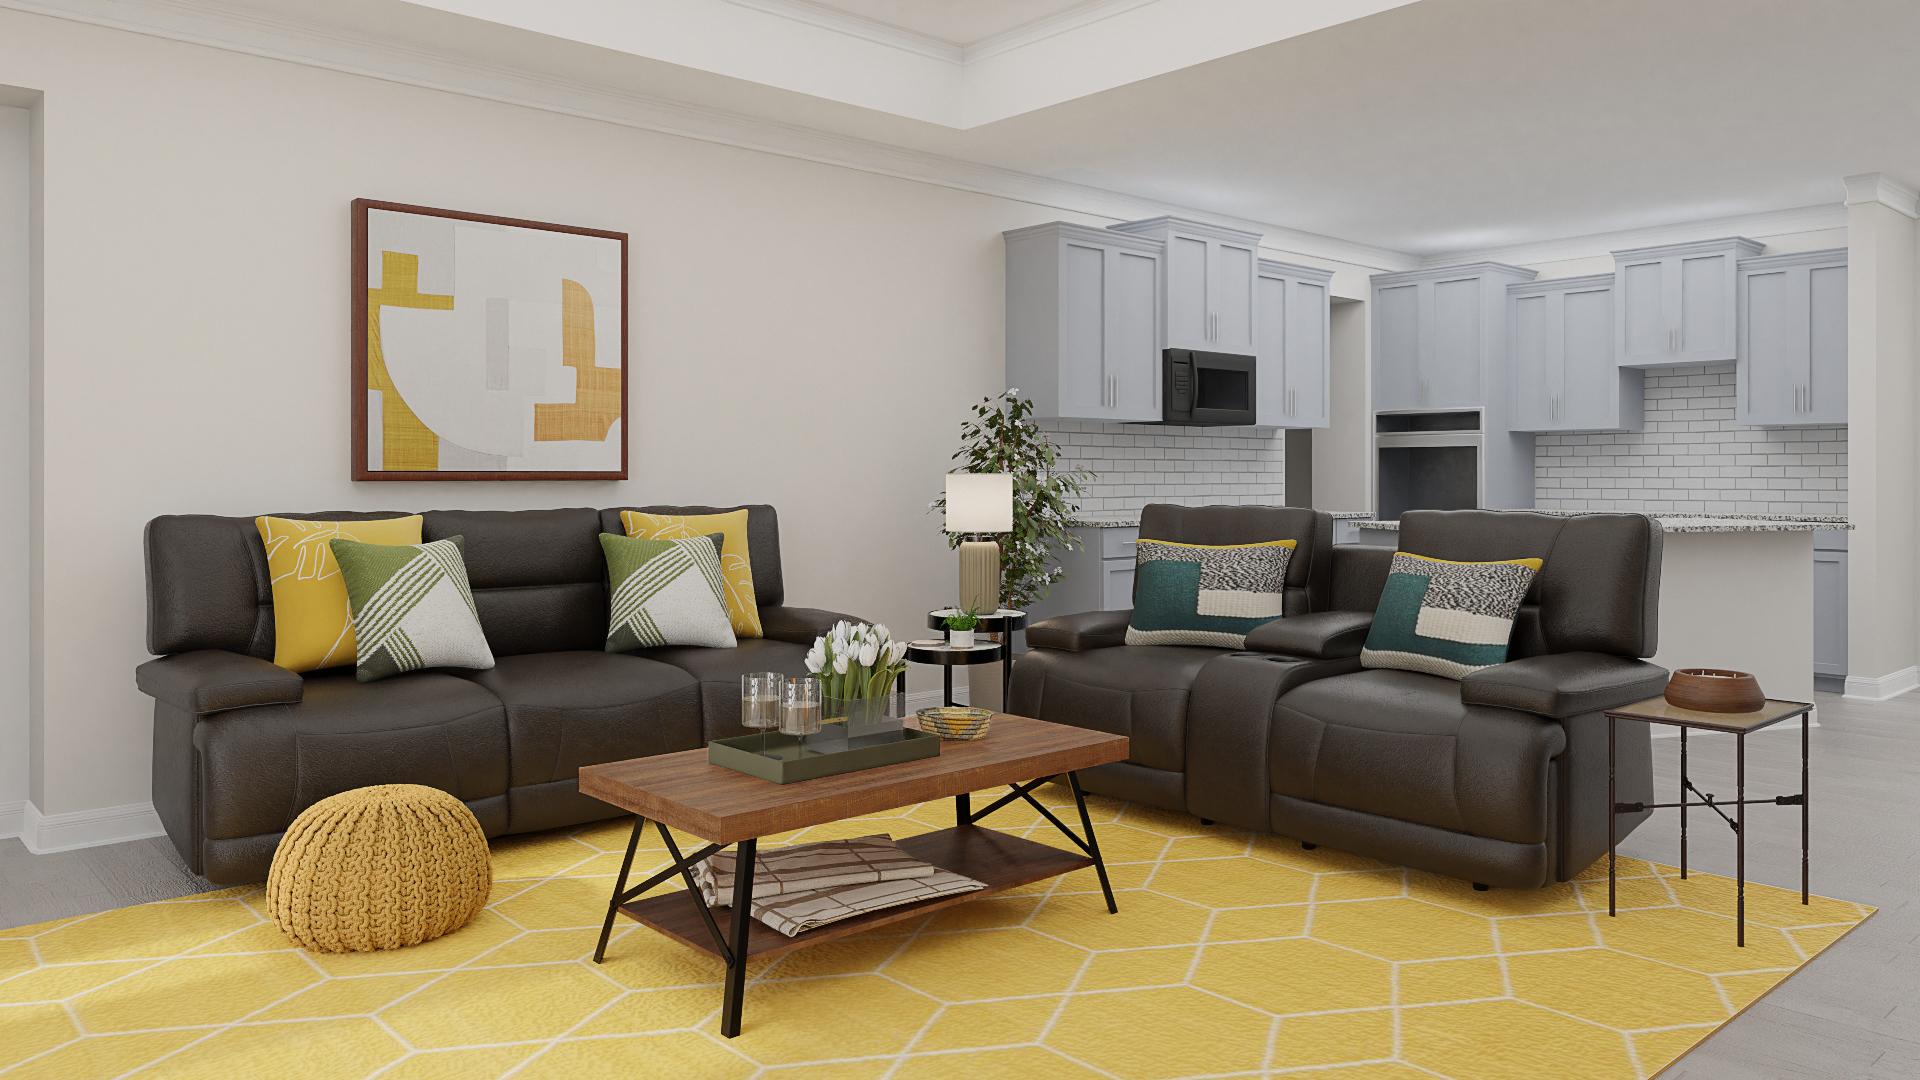 A Transitional Living Room In Pops Of Sunshine Hue